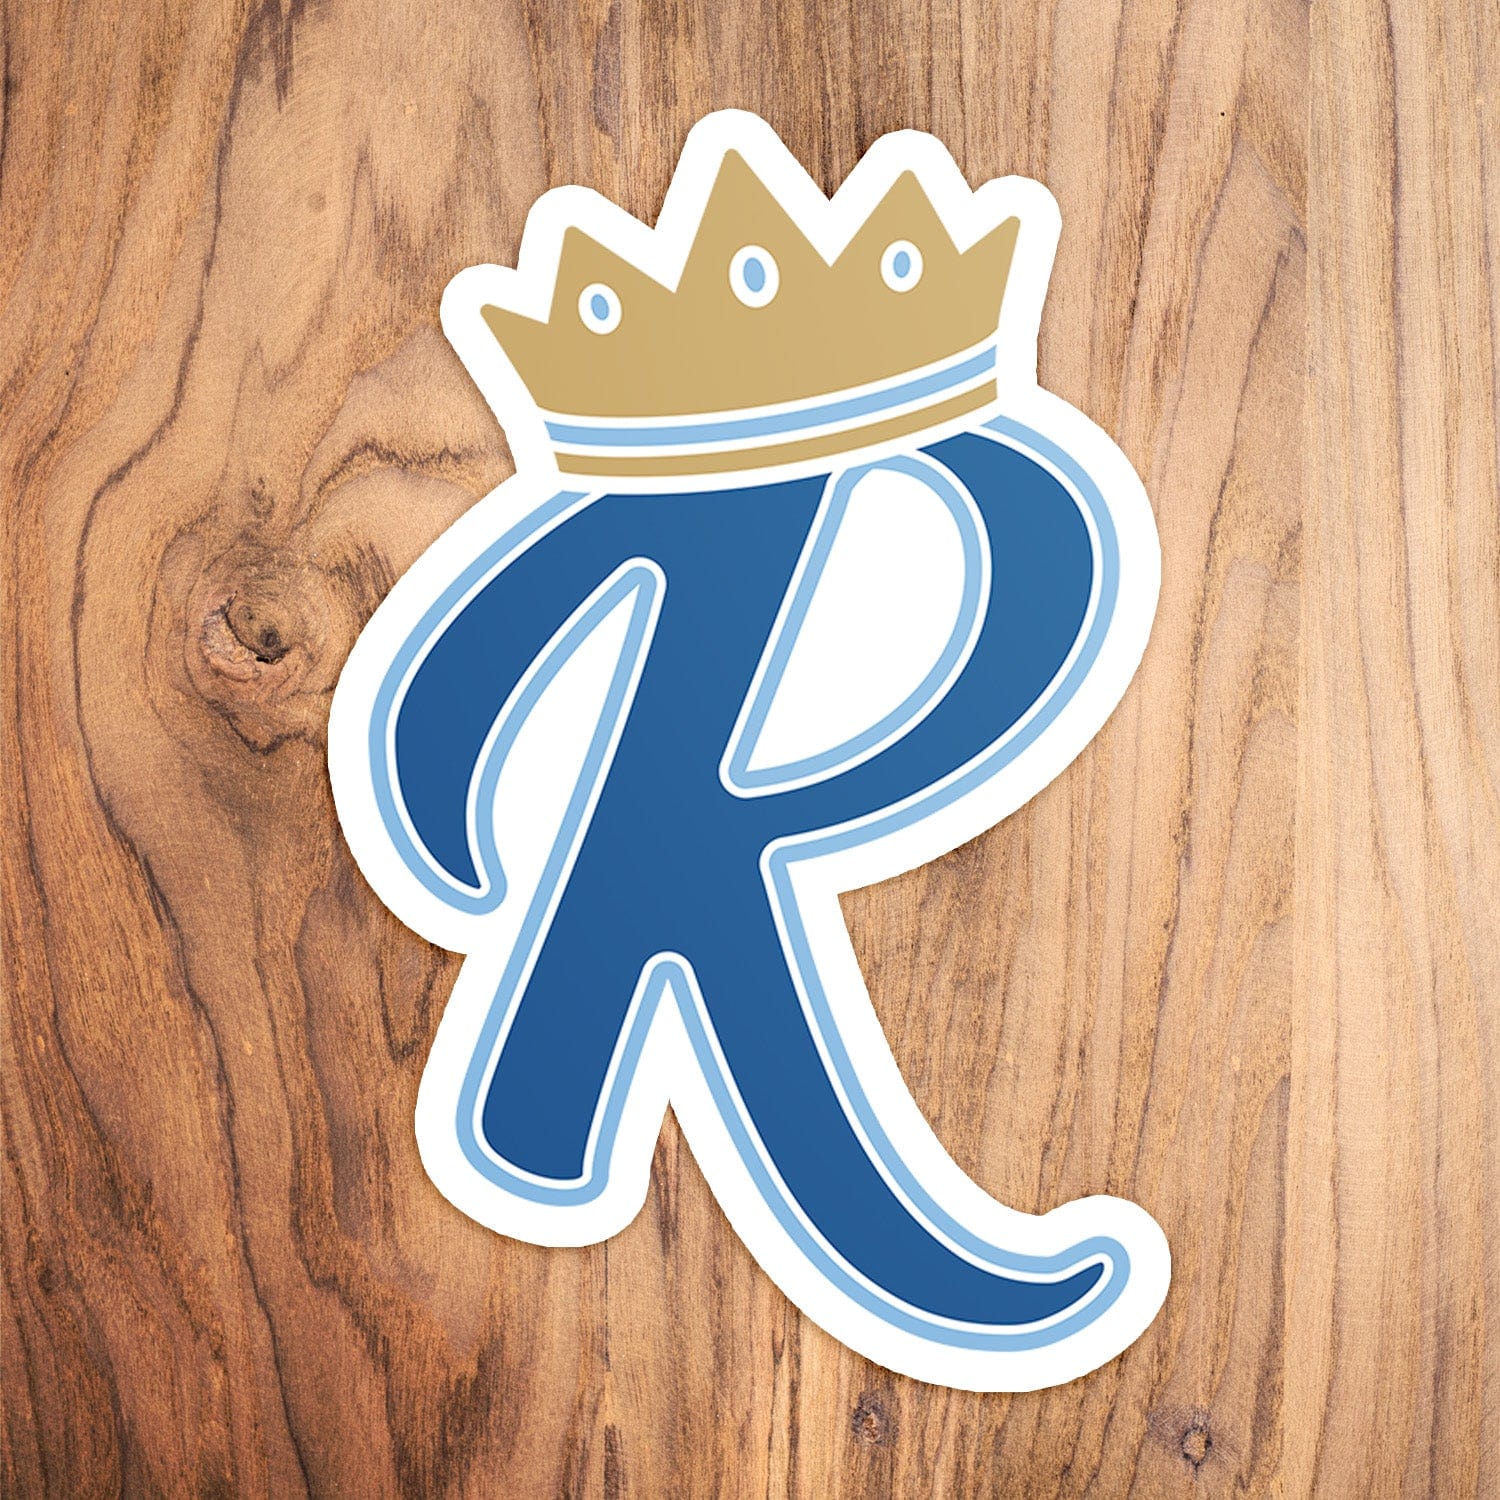 Crown R - Kansas City Royals Sticker